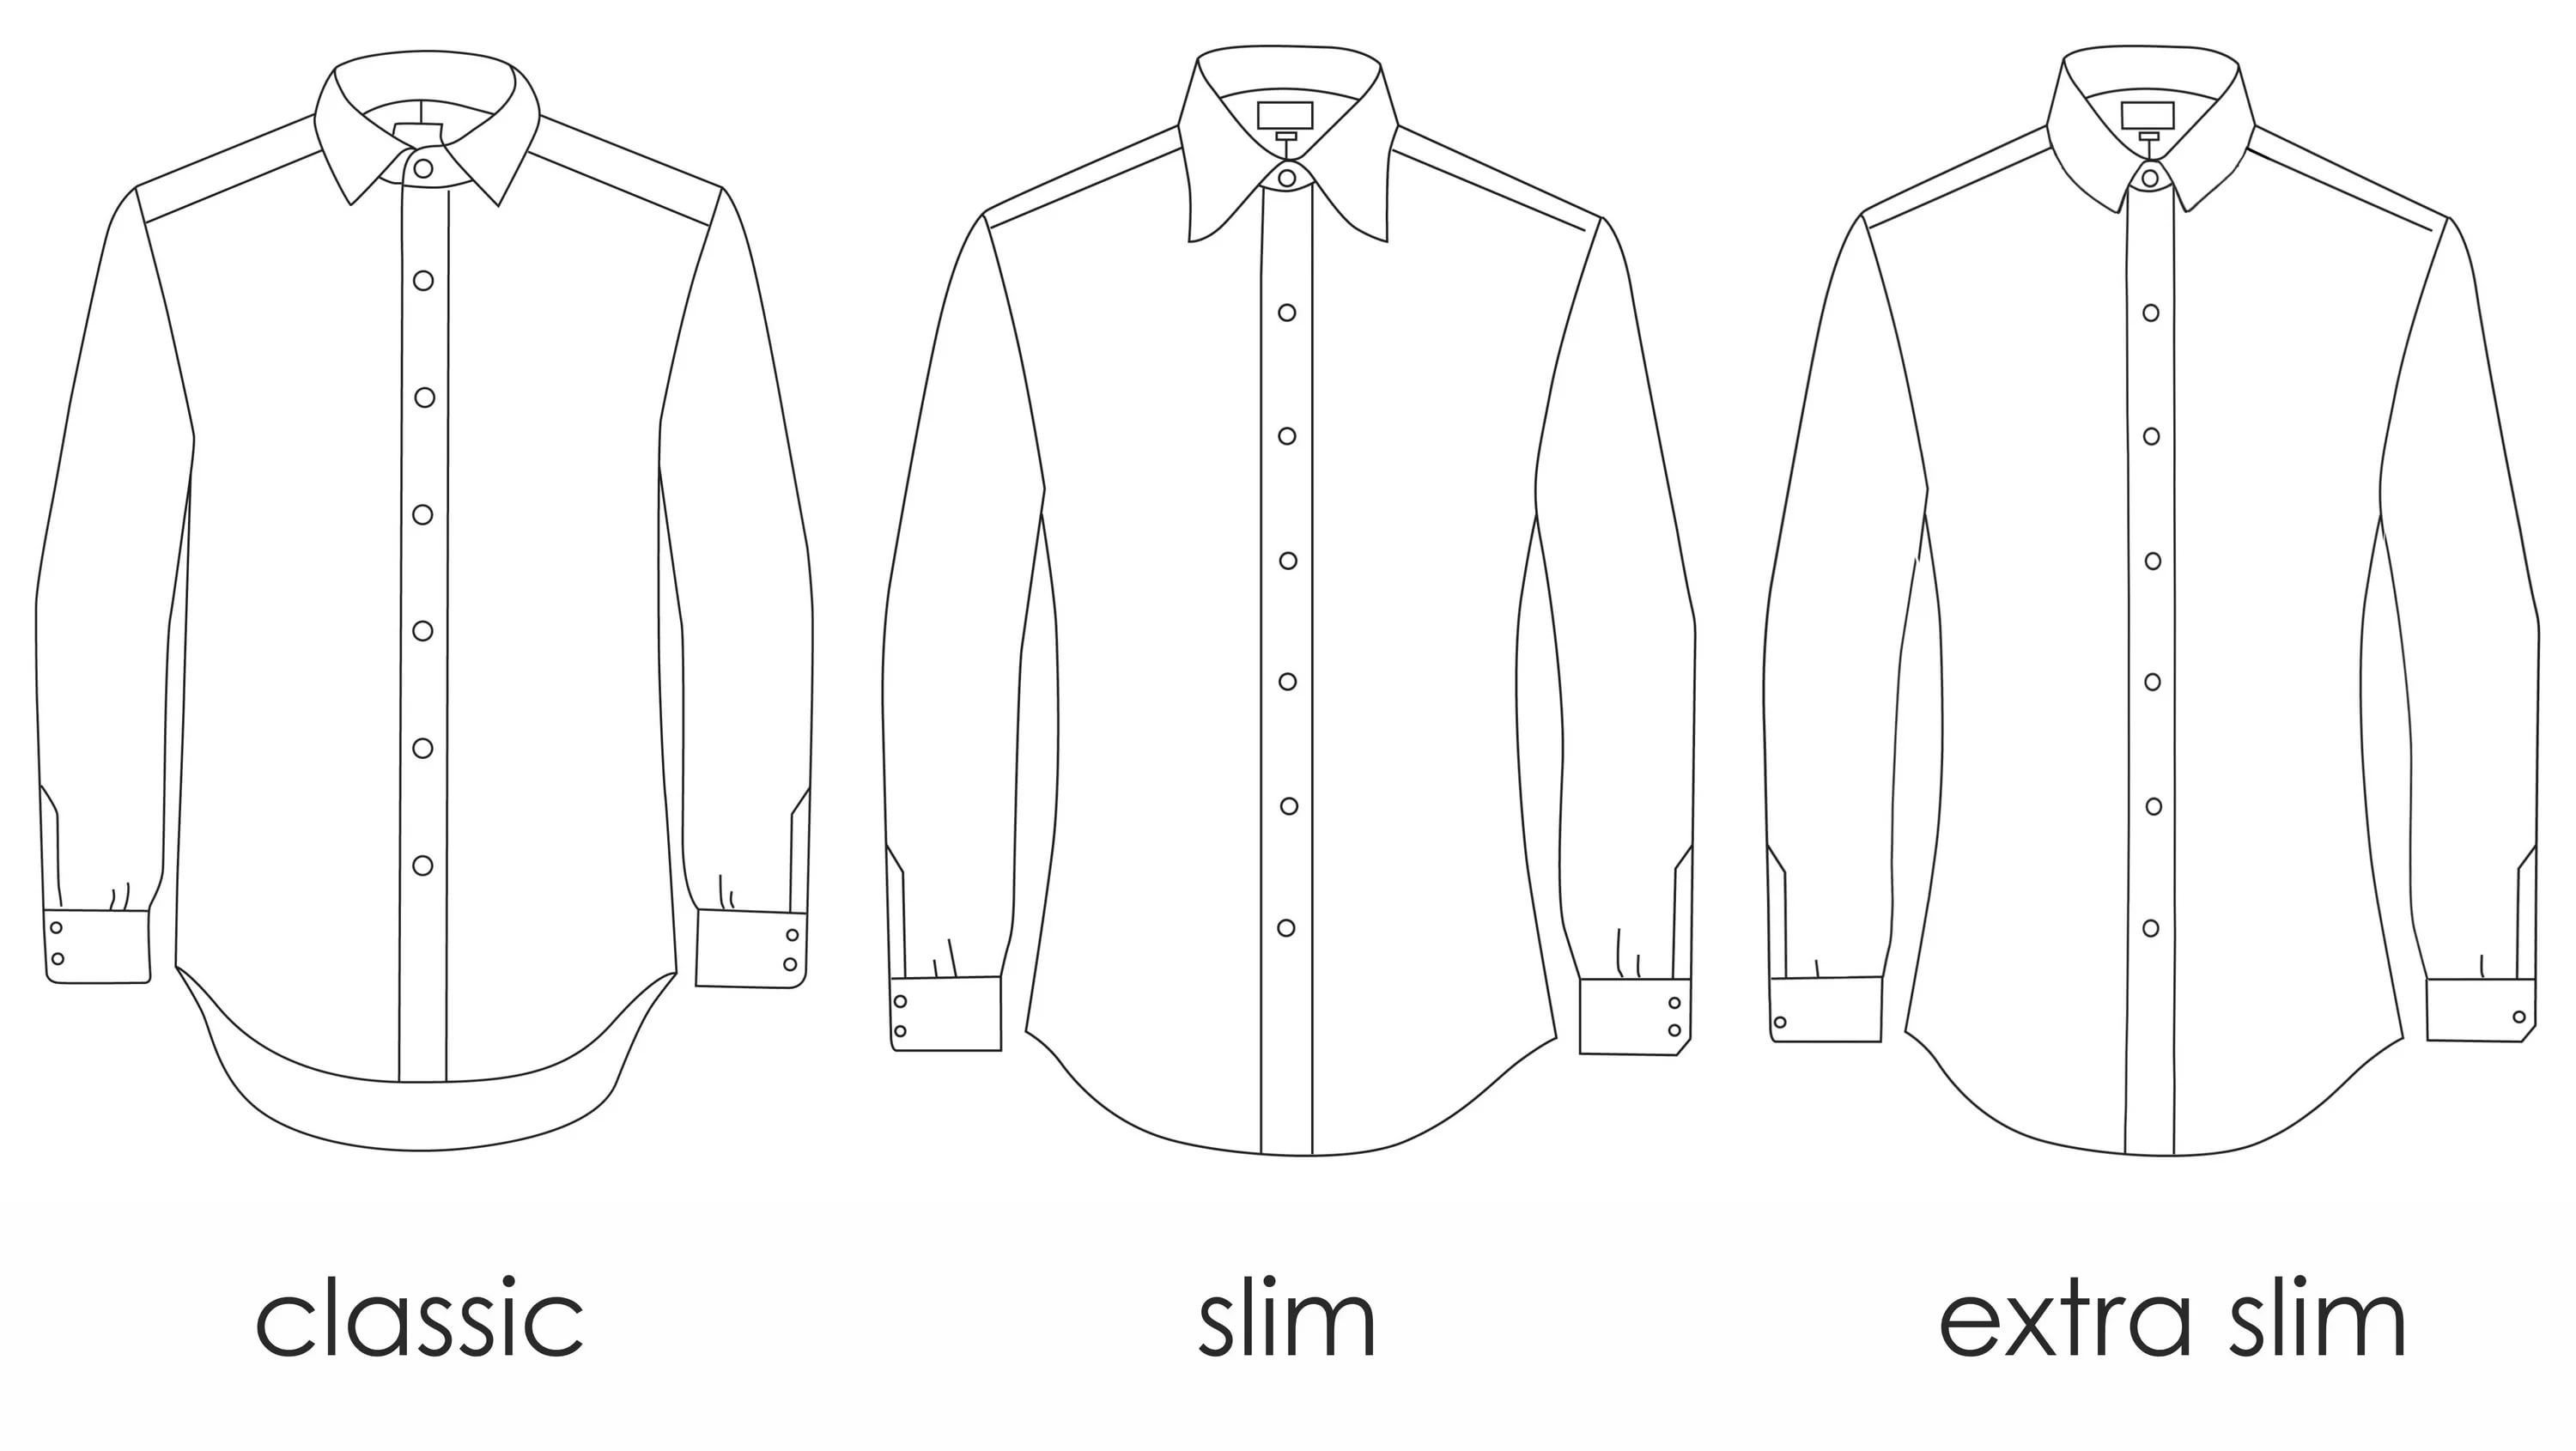 Название мужских рубашек. Силуэт рубашки мужской. Технический эскиз рубашки. Эскиз классической мужской рубашки.